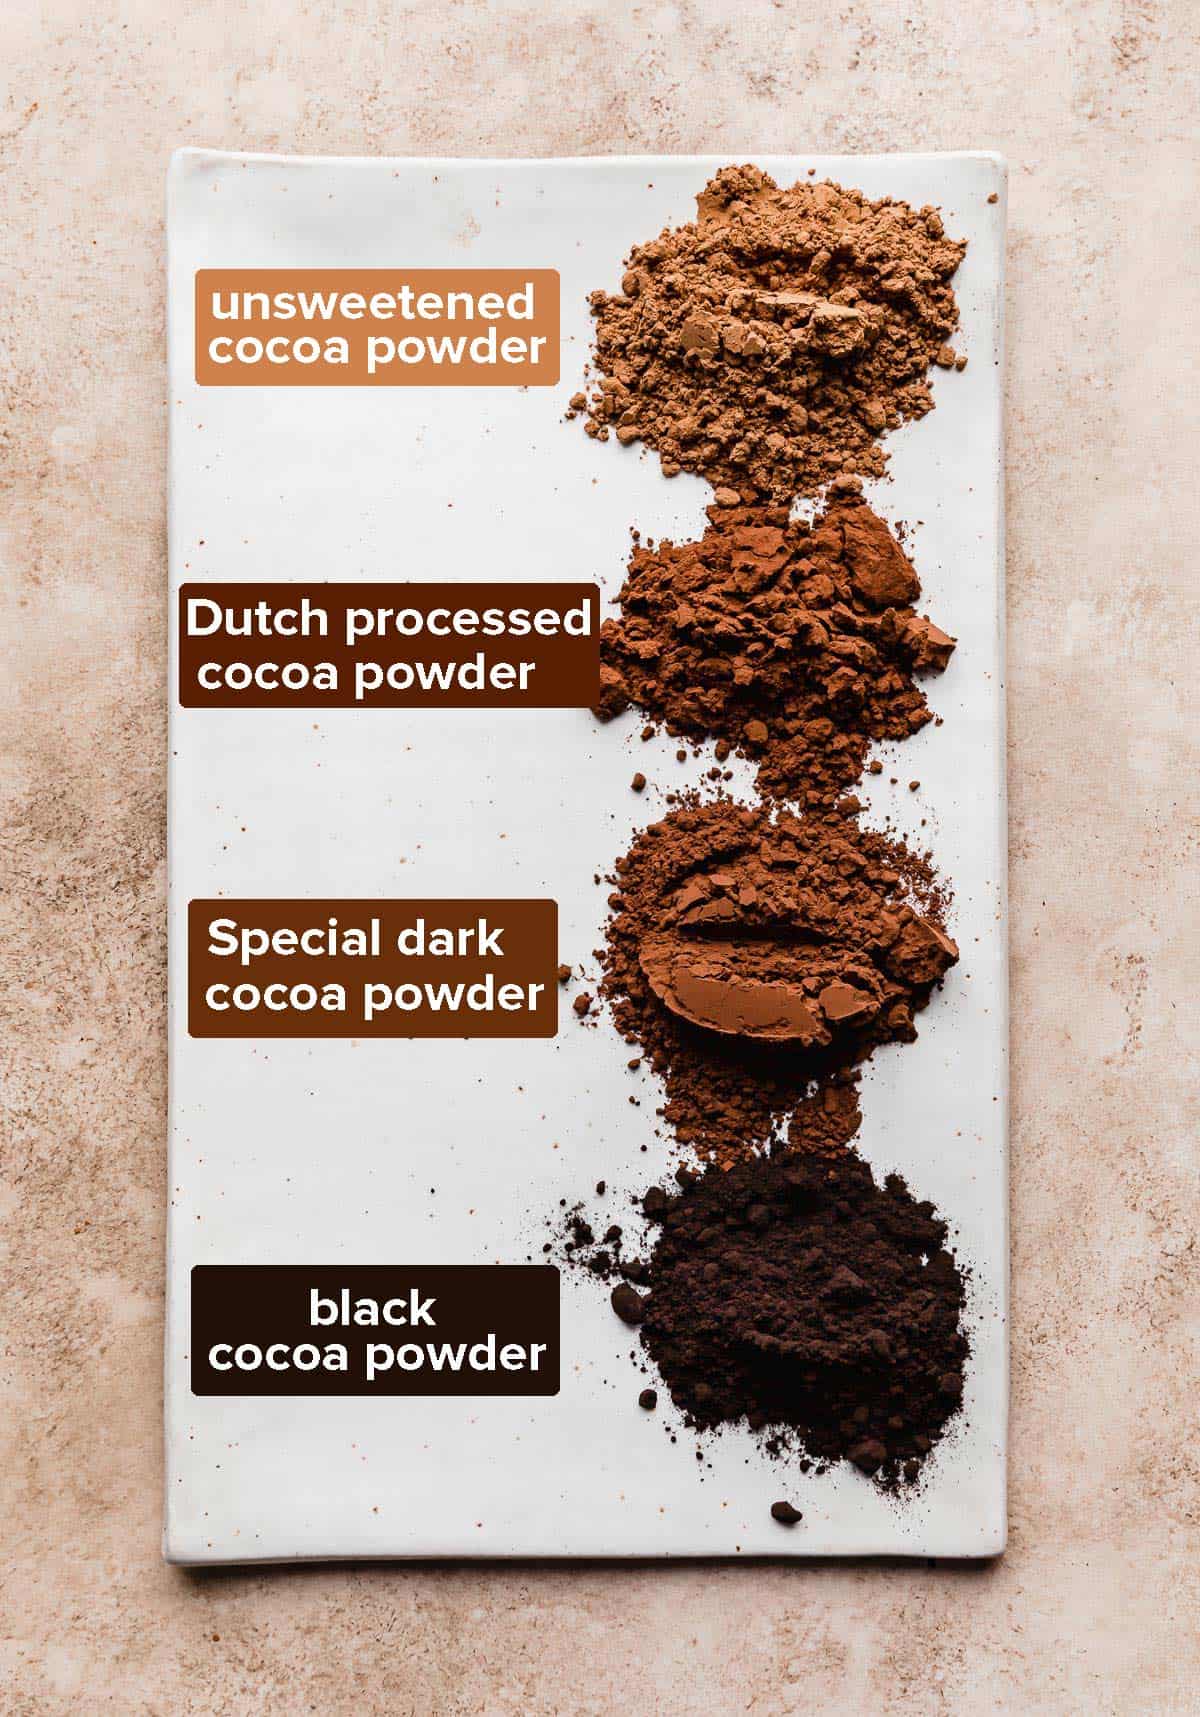 Unsweetened cocoa, dutch processed cocoa, special dark cocoa, and black cocoa on a white plate.